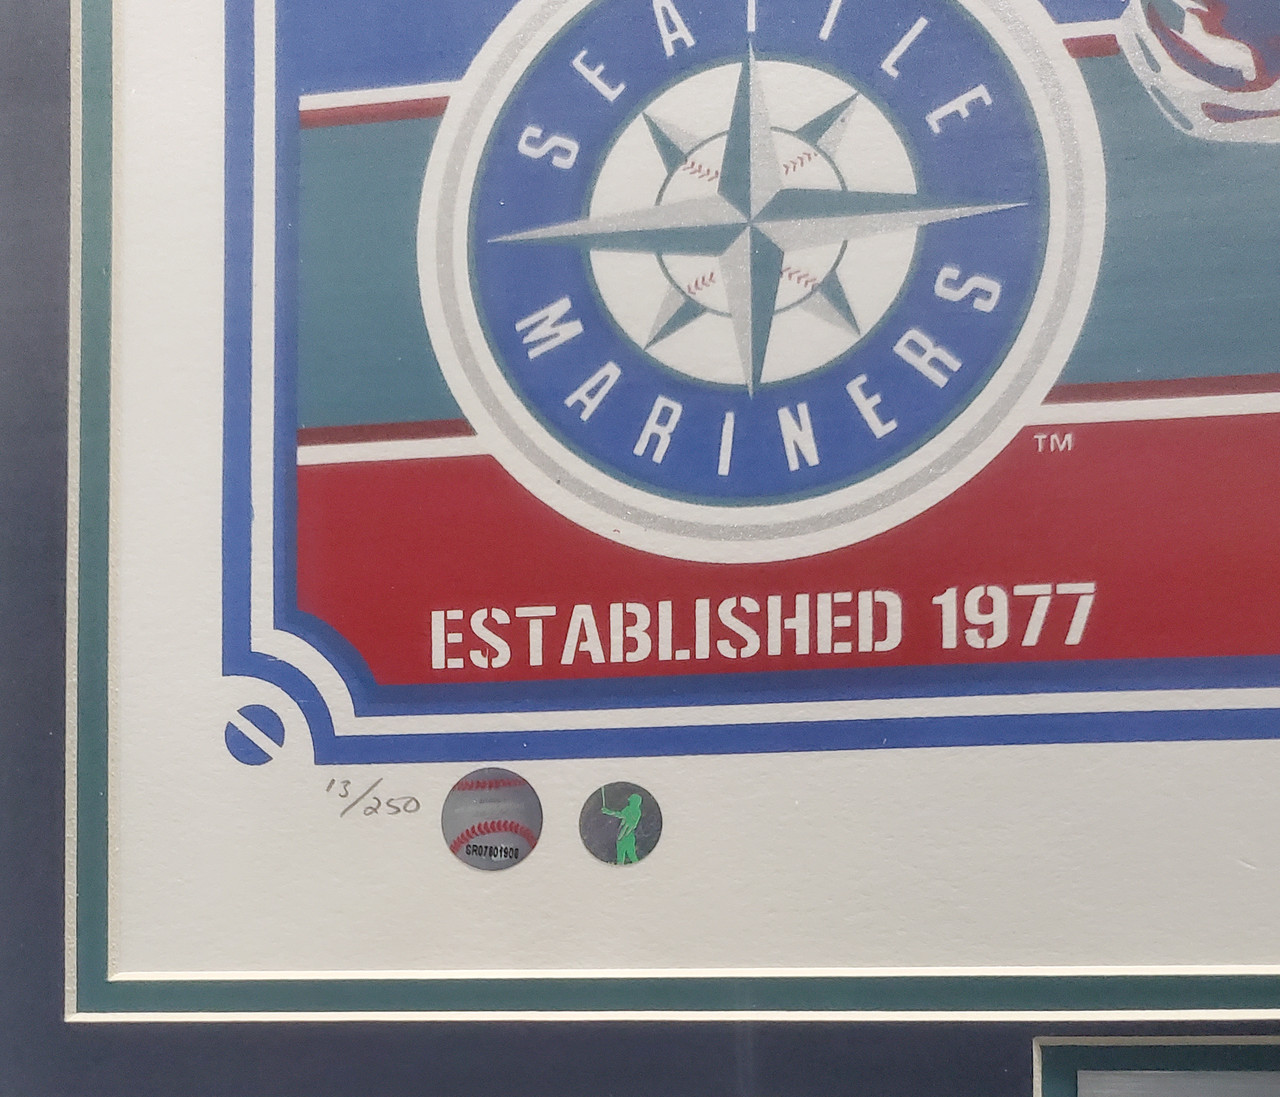  Ichiro Suzuki 2021 Topps Gallery Baseball Card #181 (Seattle  Mariners) Free Shipping & Tracking : Collectibles & Fine Art